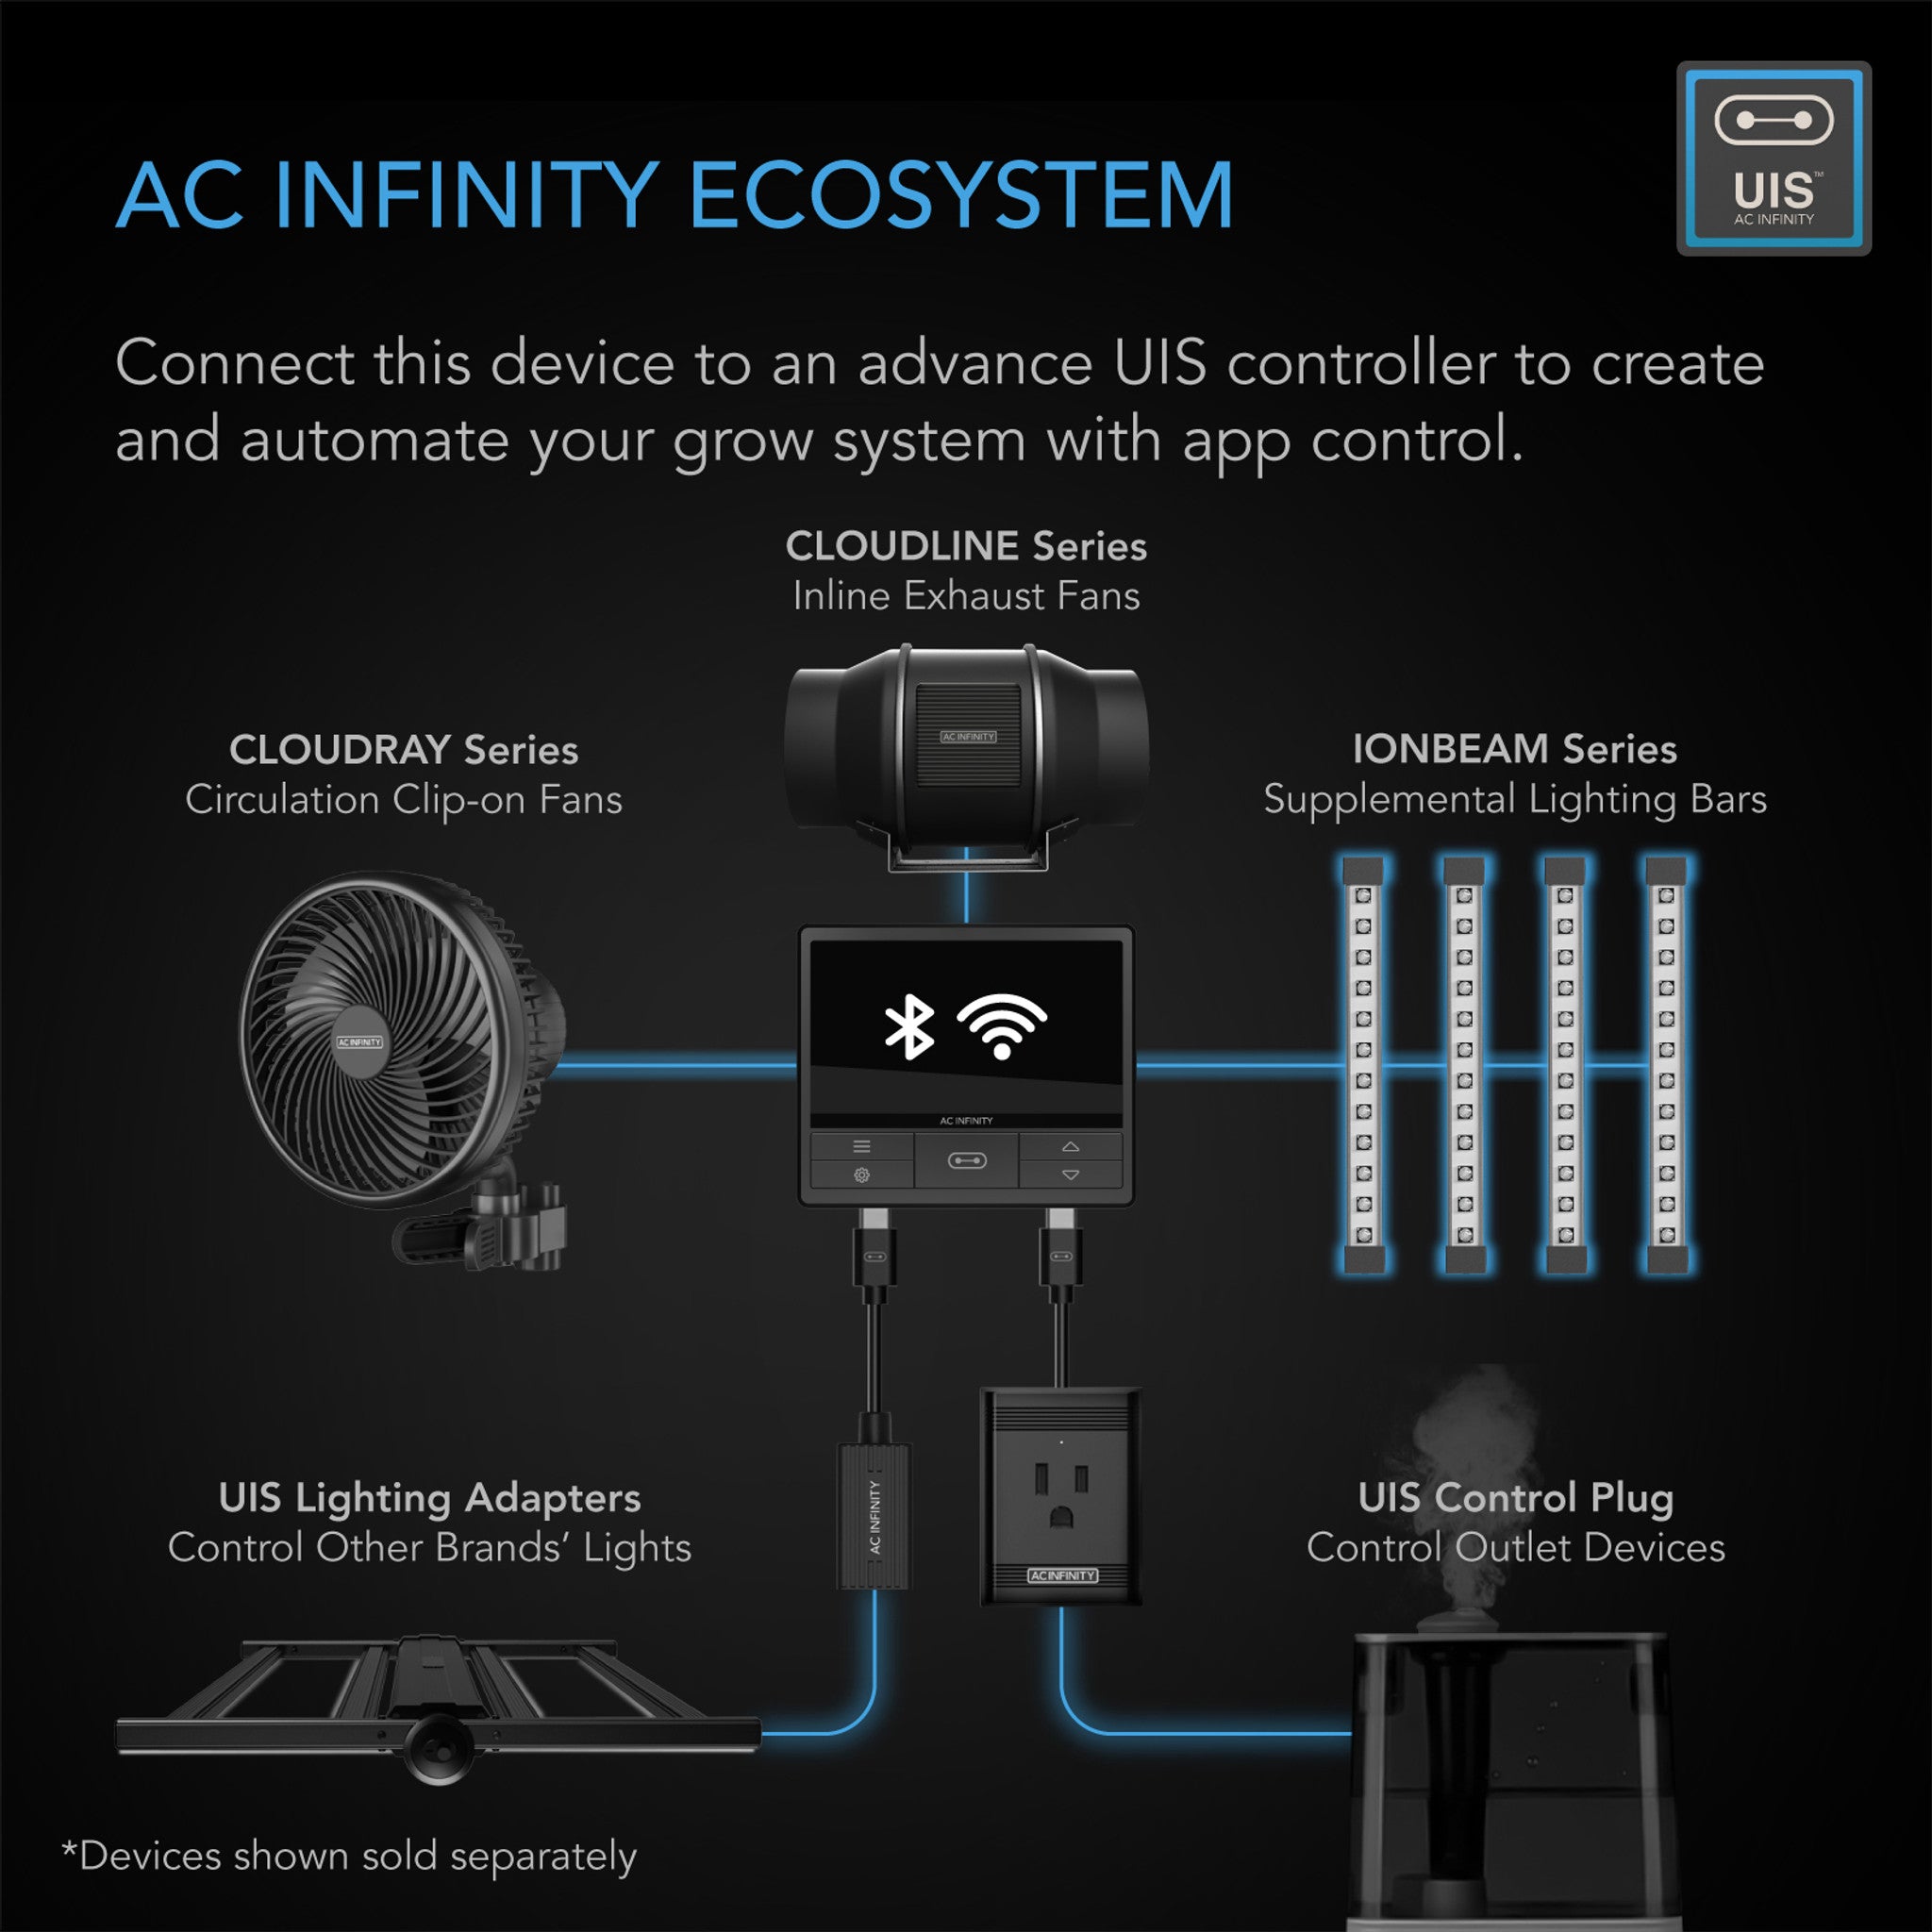 AC Infinity Ion Beam U2 2-Bar Kit Supplemental Lighting